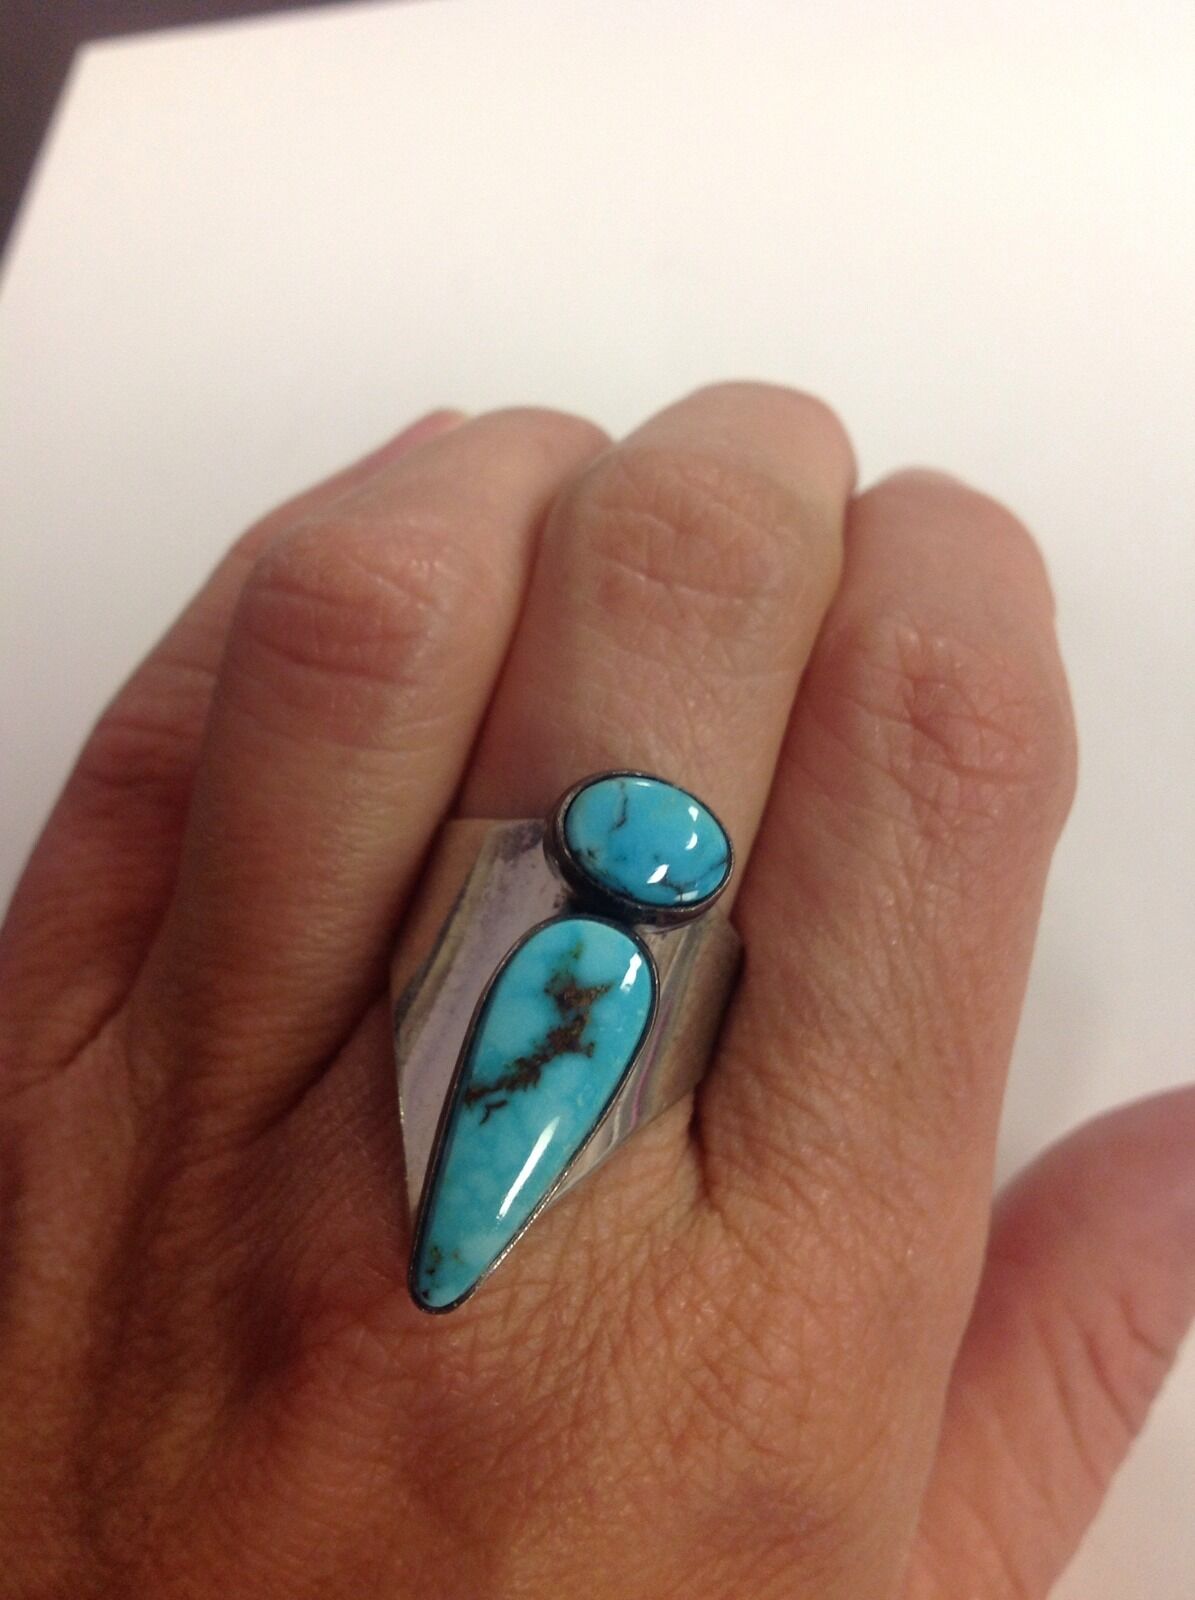  Vintage SHARON SANDOVAL Native American Ring Size 9 Adjustable Turquoise